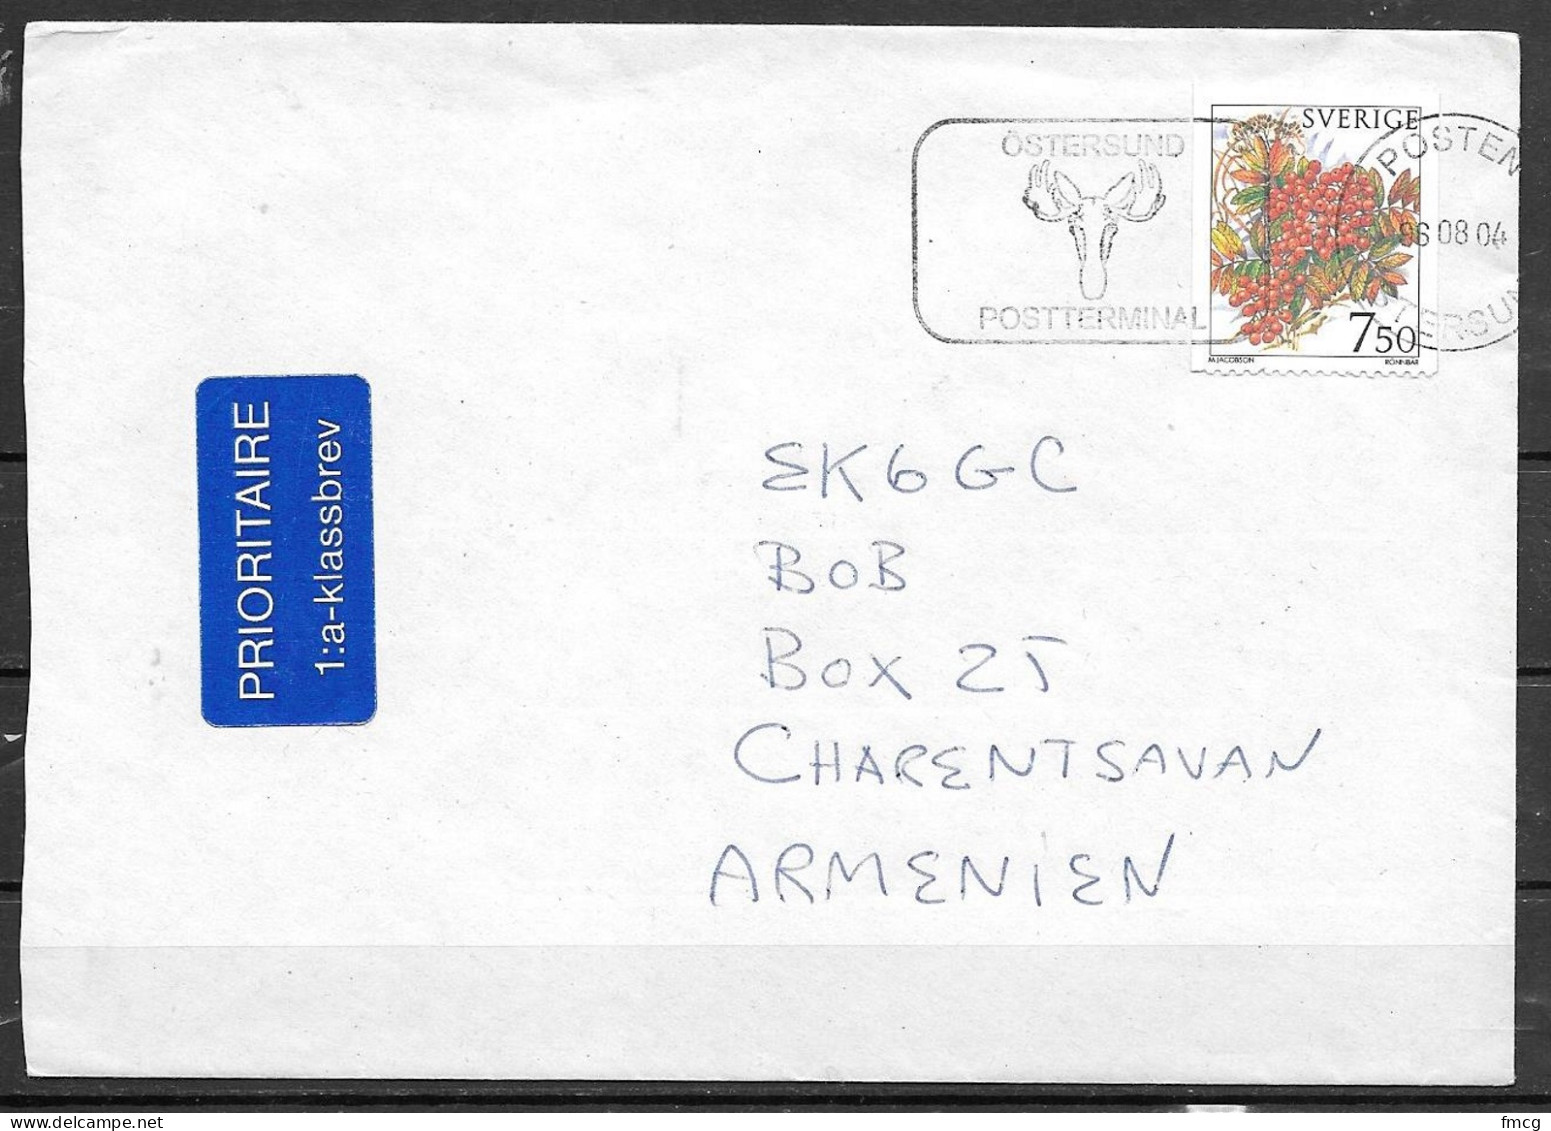 2004 7.50Kr Berries On Cover To Armenia - Briefe U. Dokumente